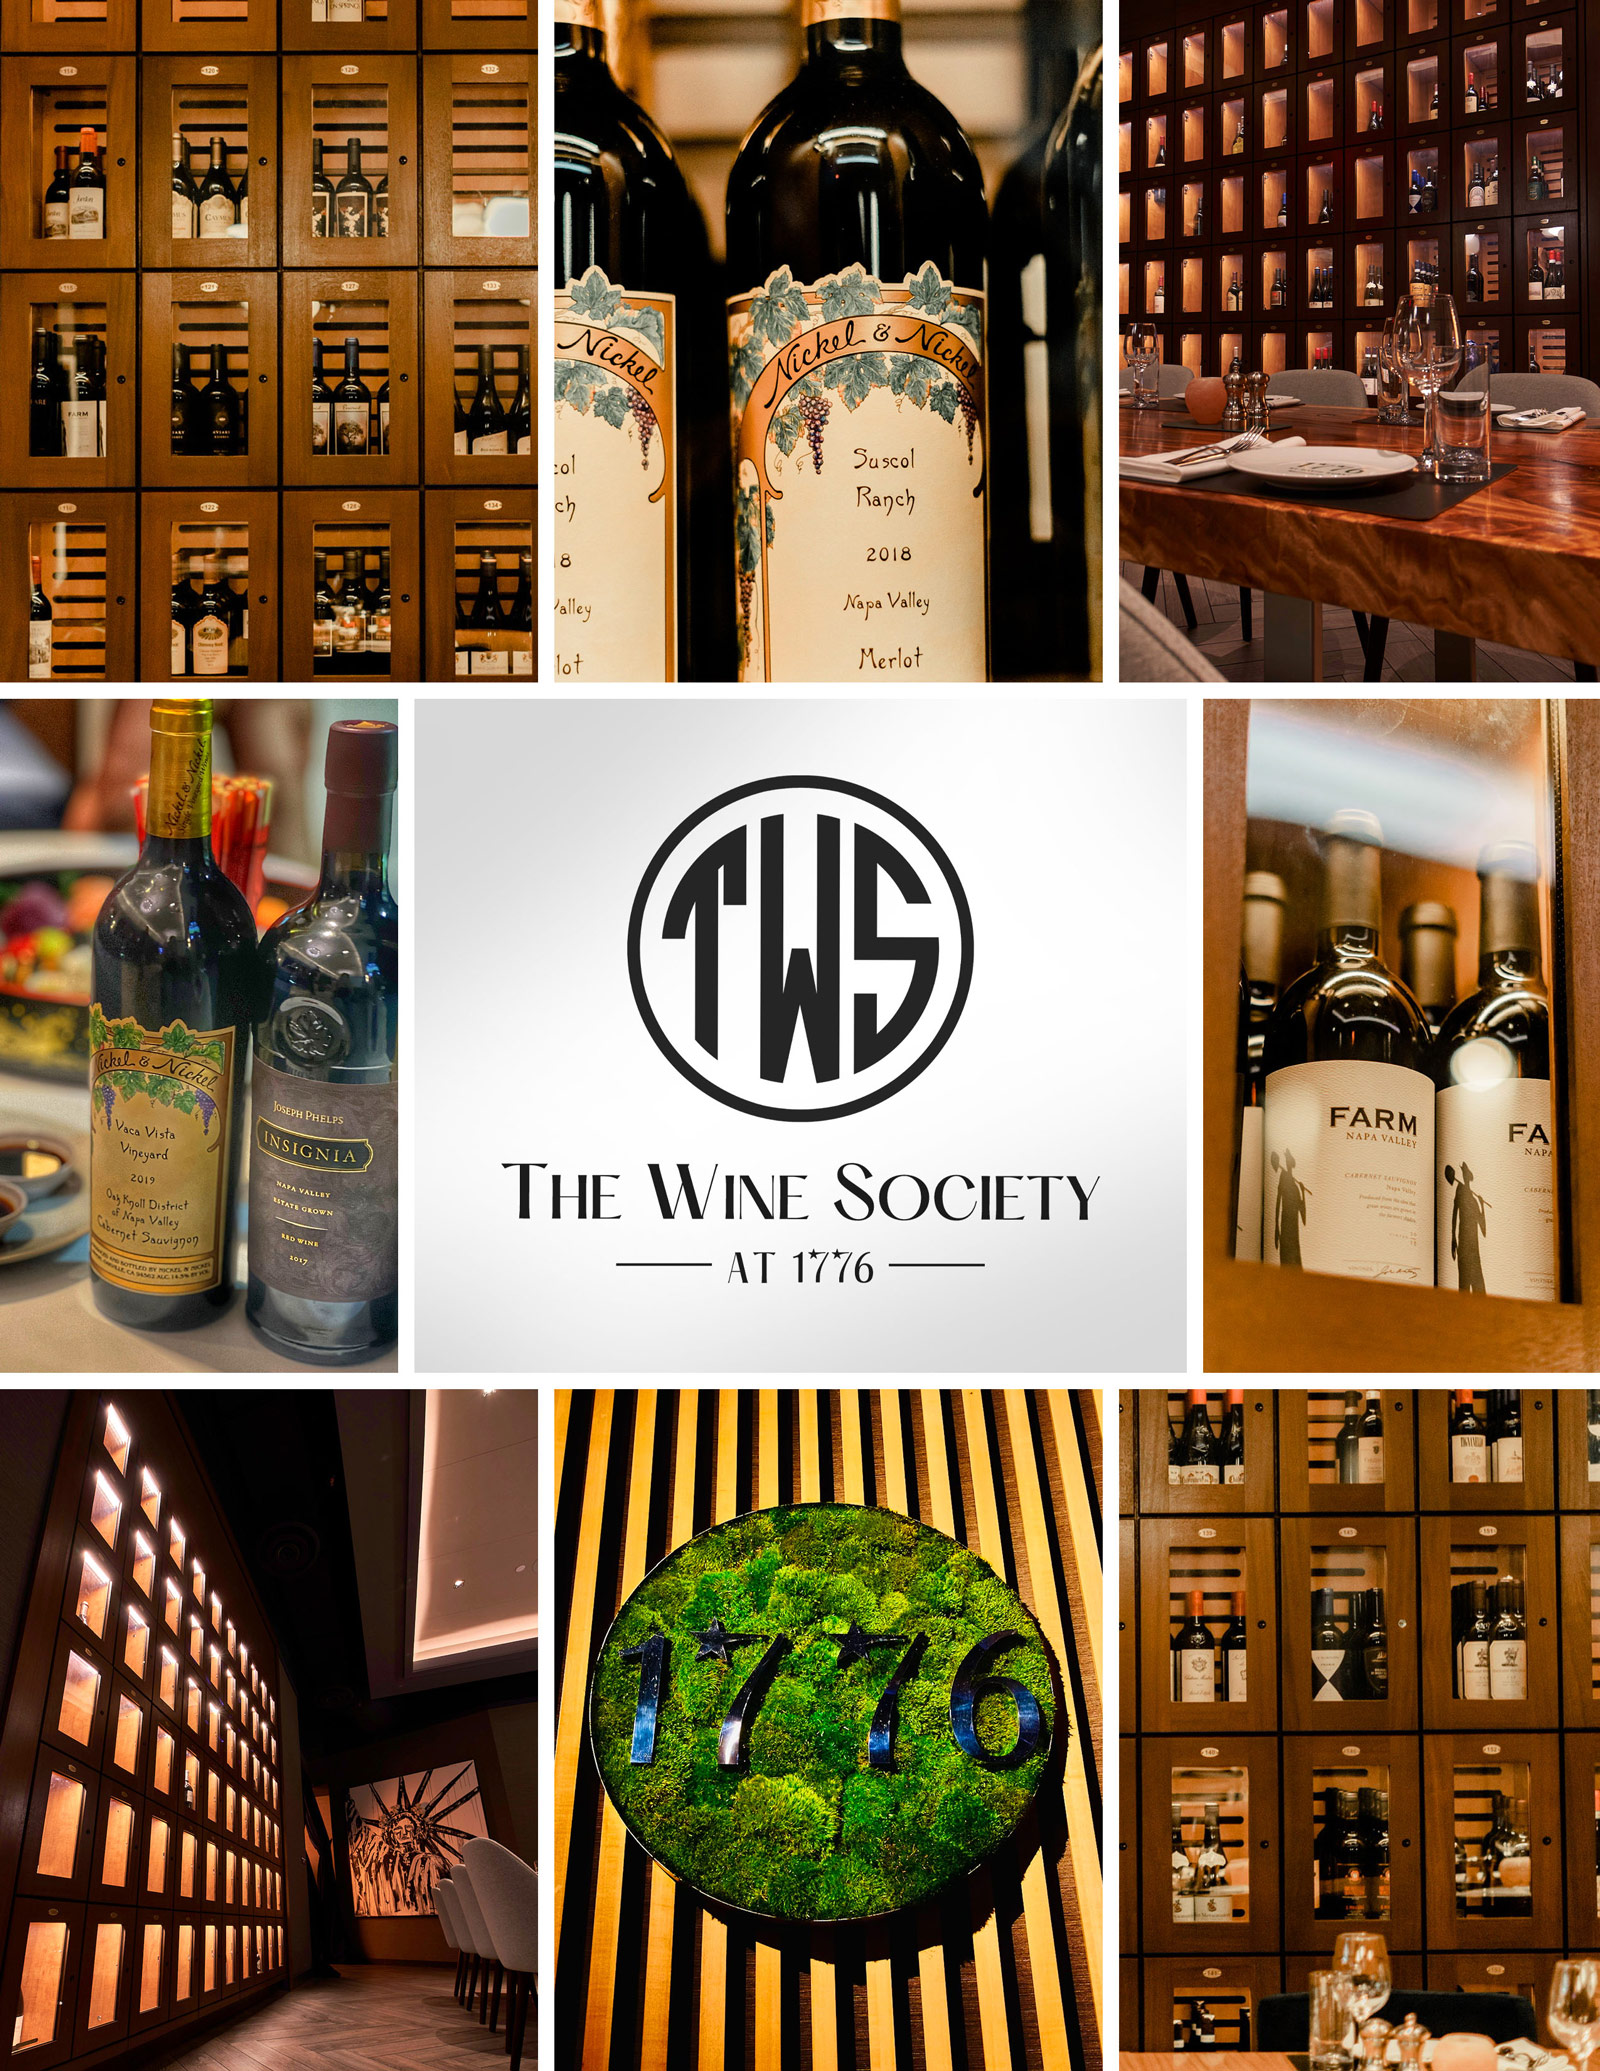 The Wine Society at 1776